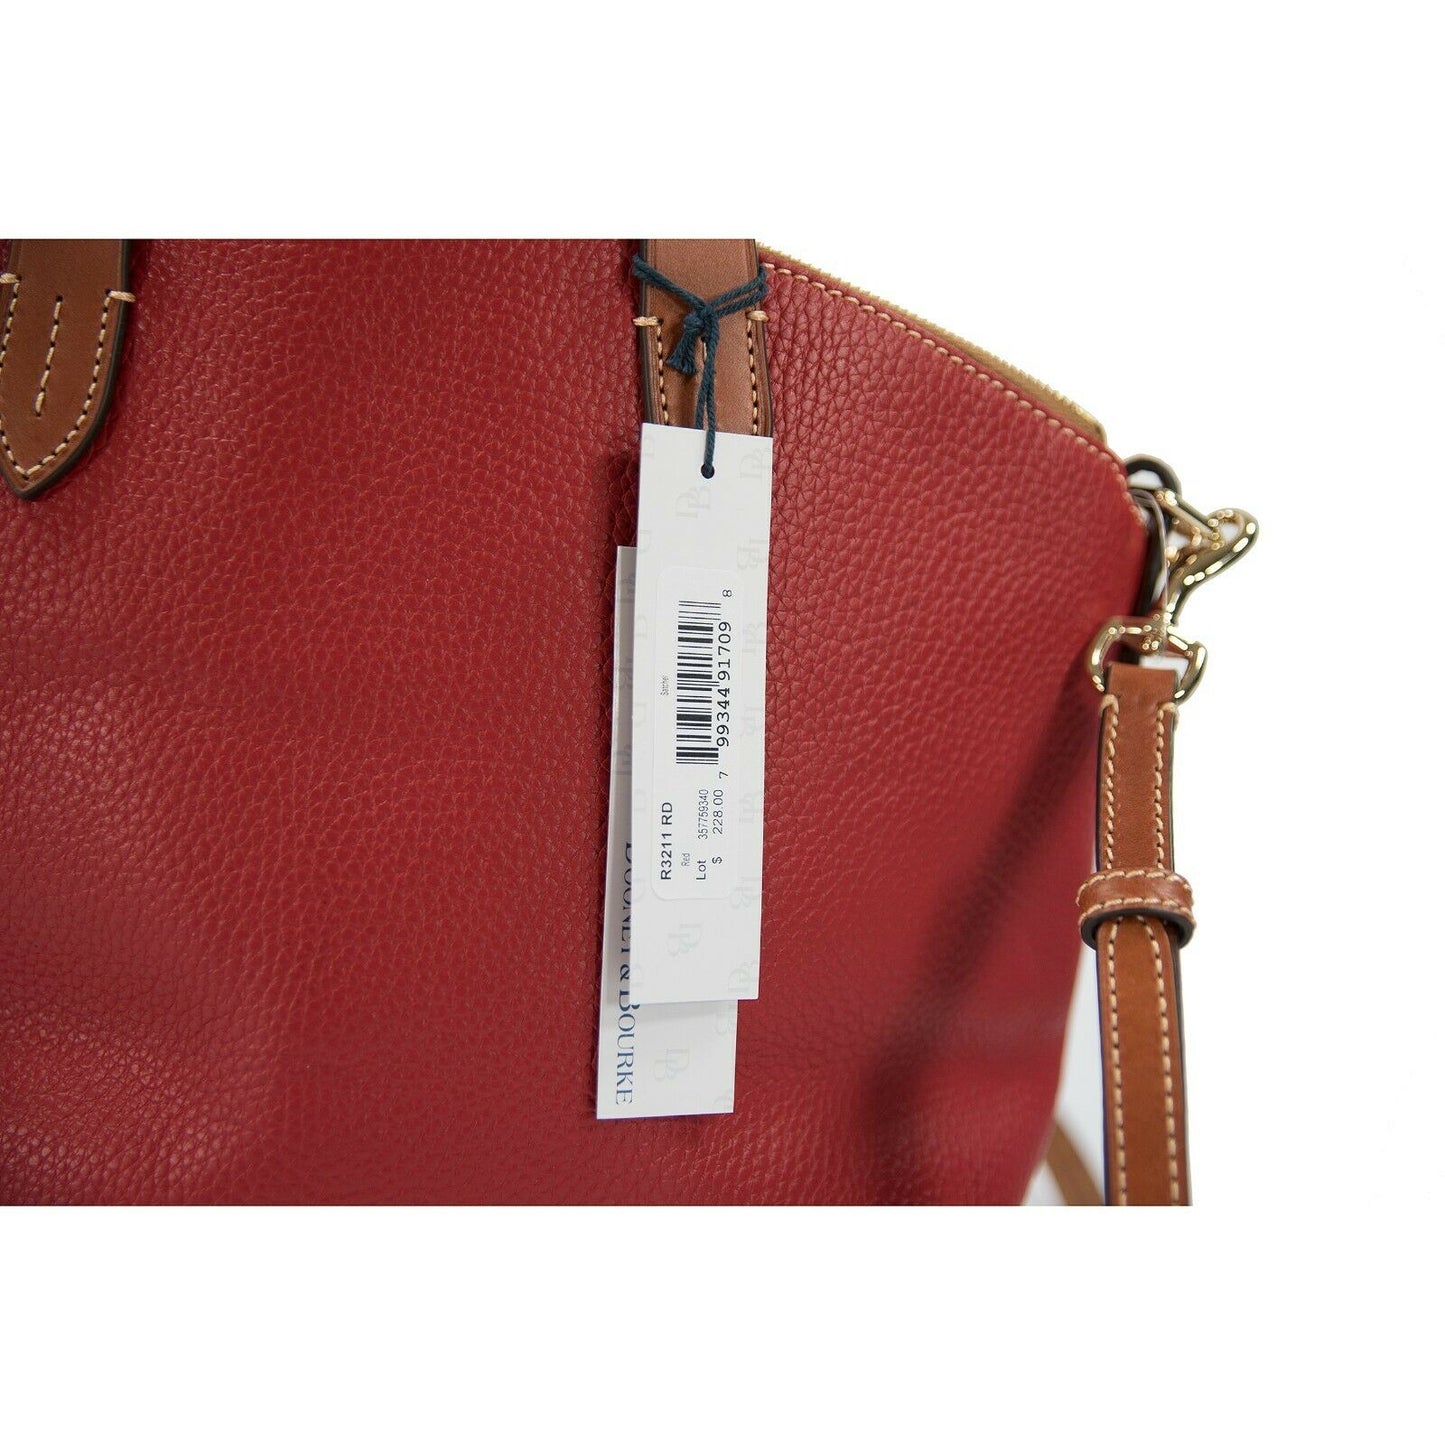 Dooney & Bourke Red Pebbled Leather Large Satchel Bag NWT